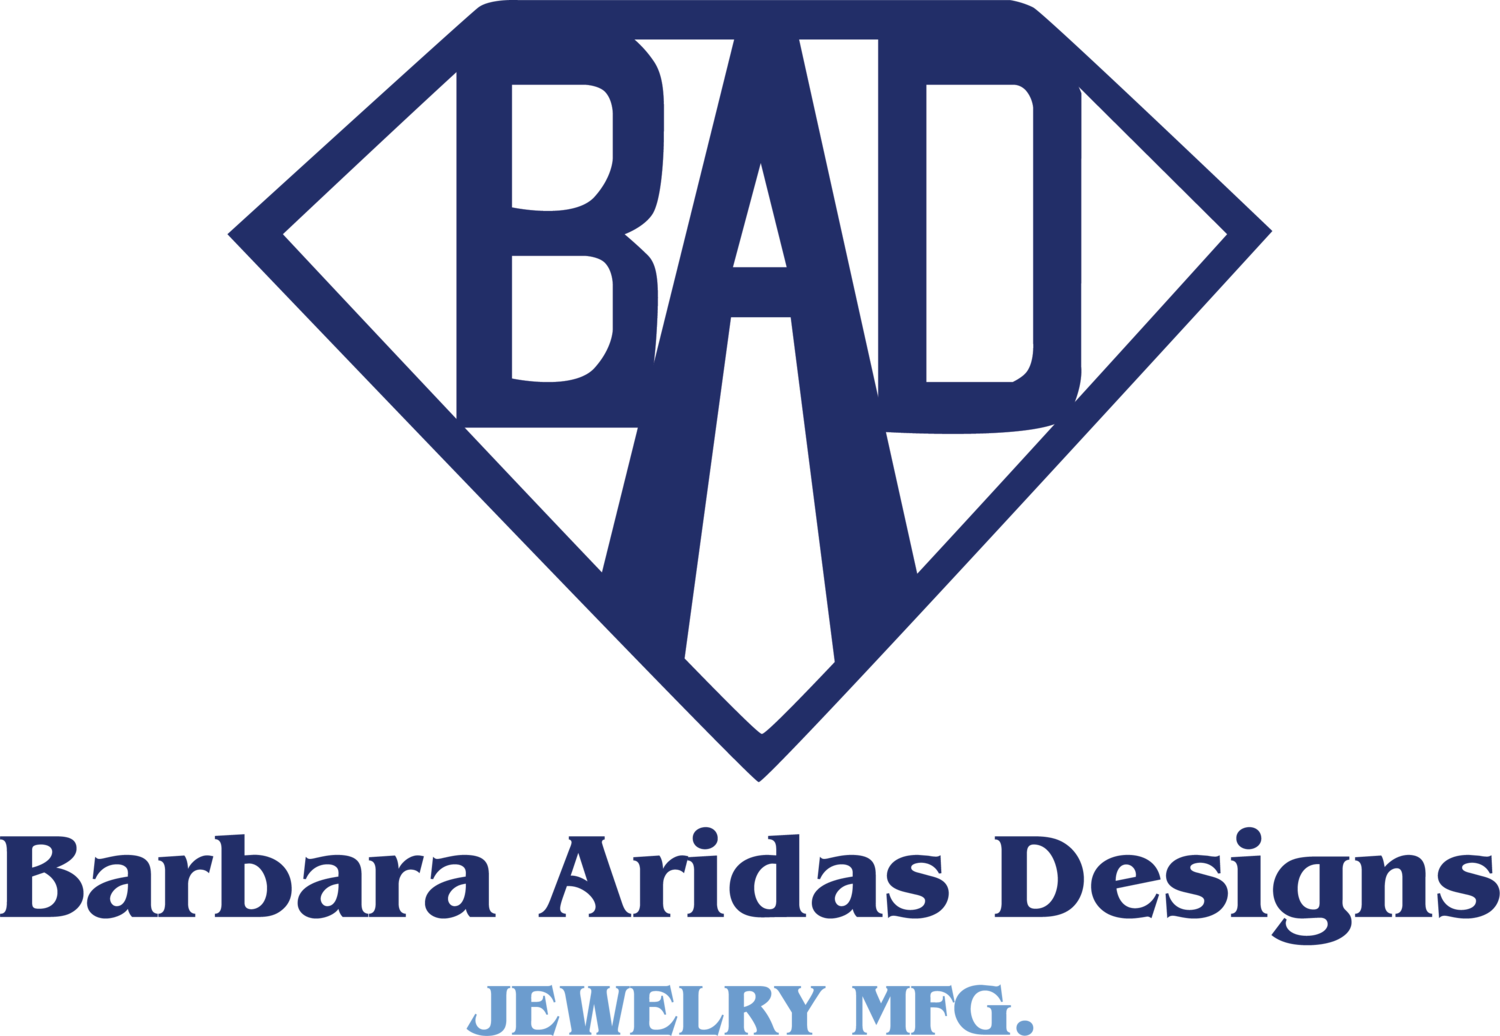 Barbara Aridas Designs